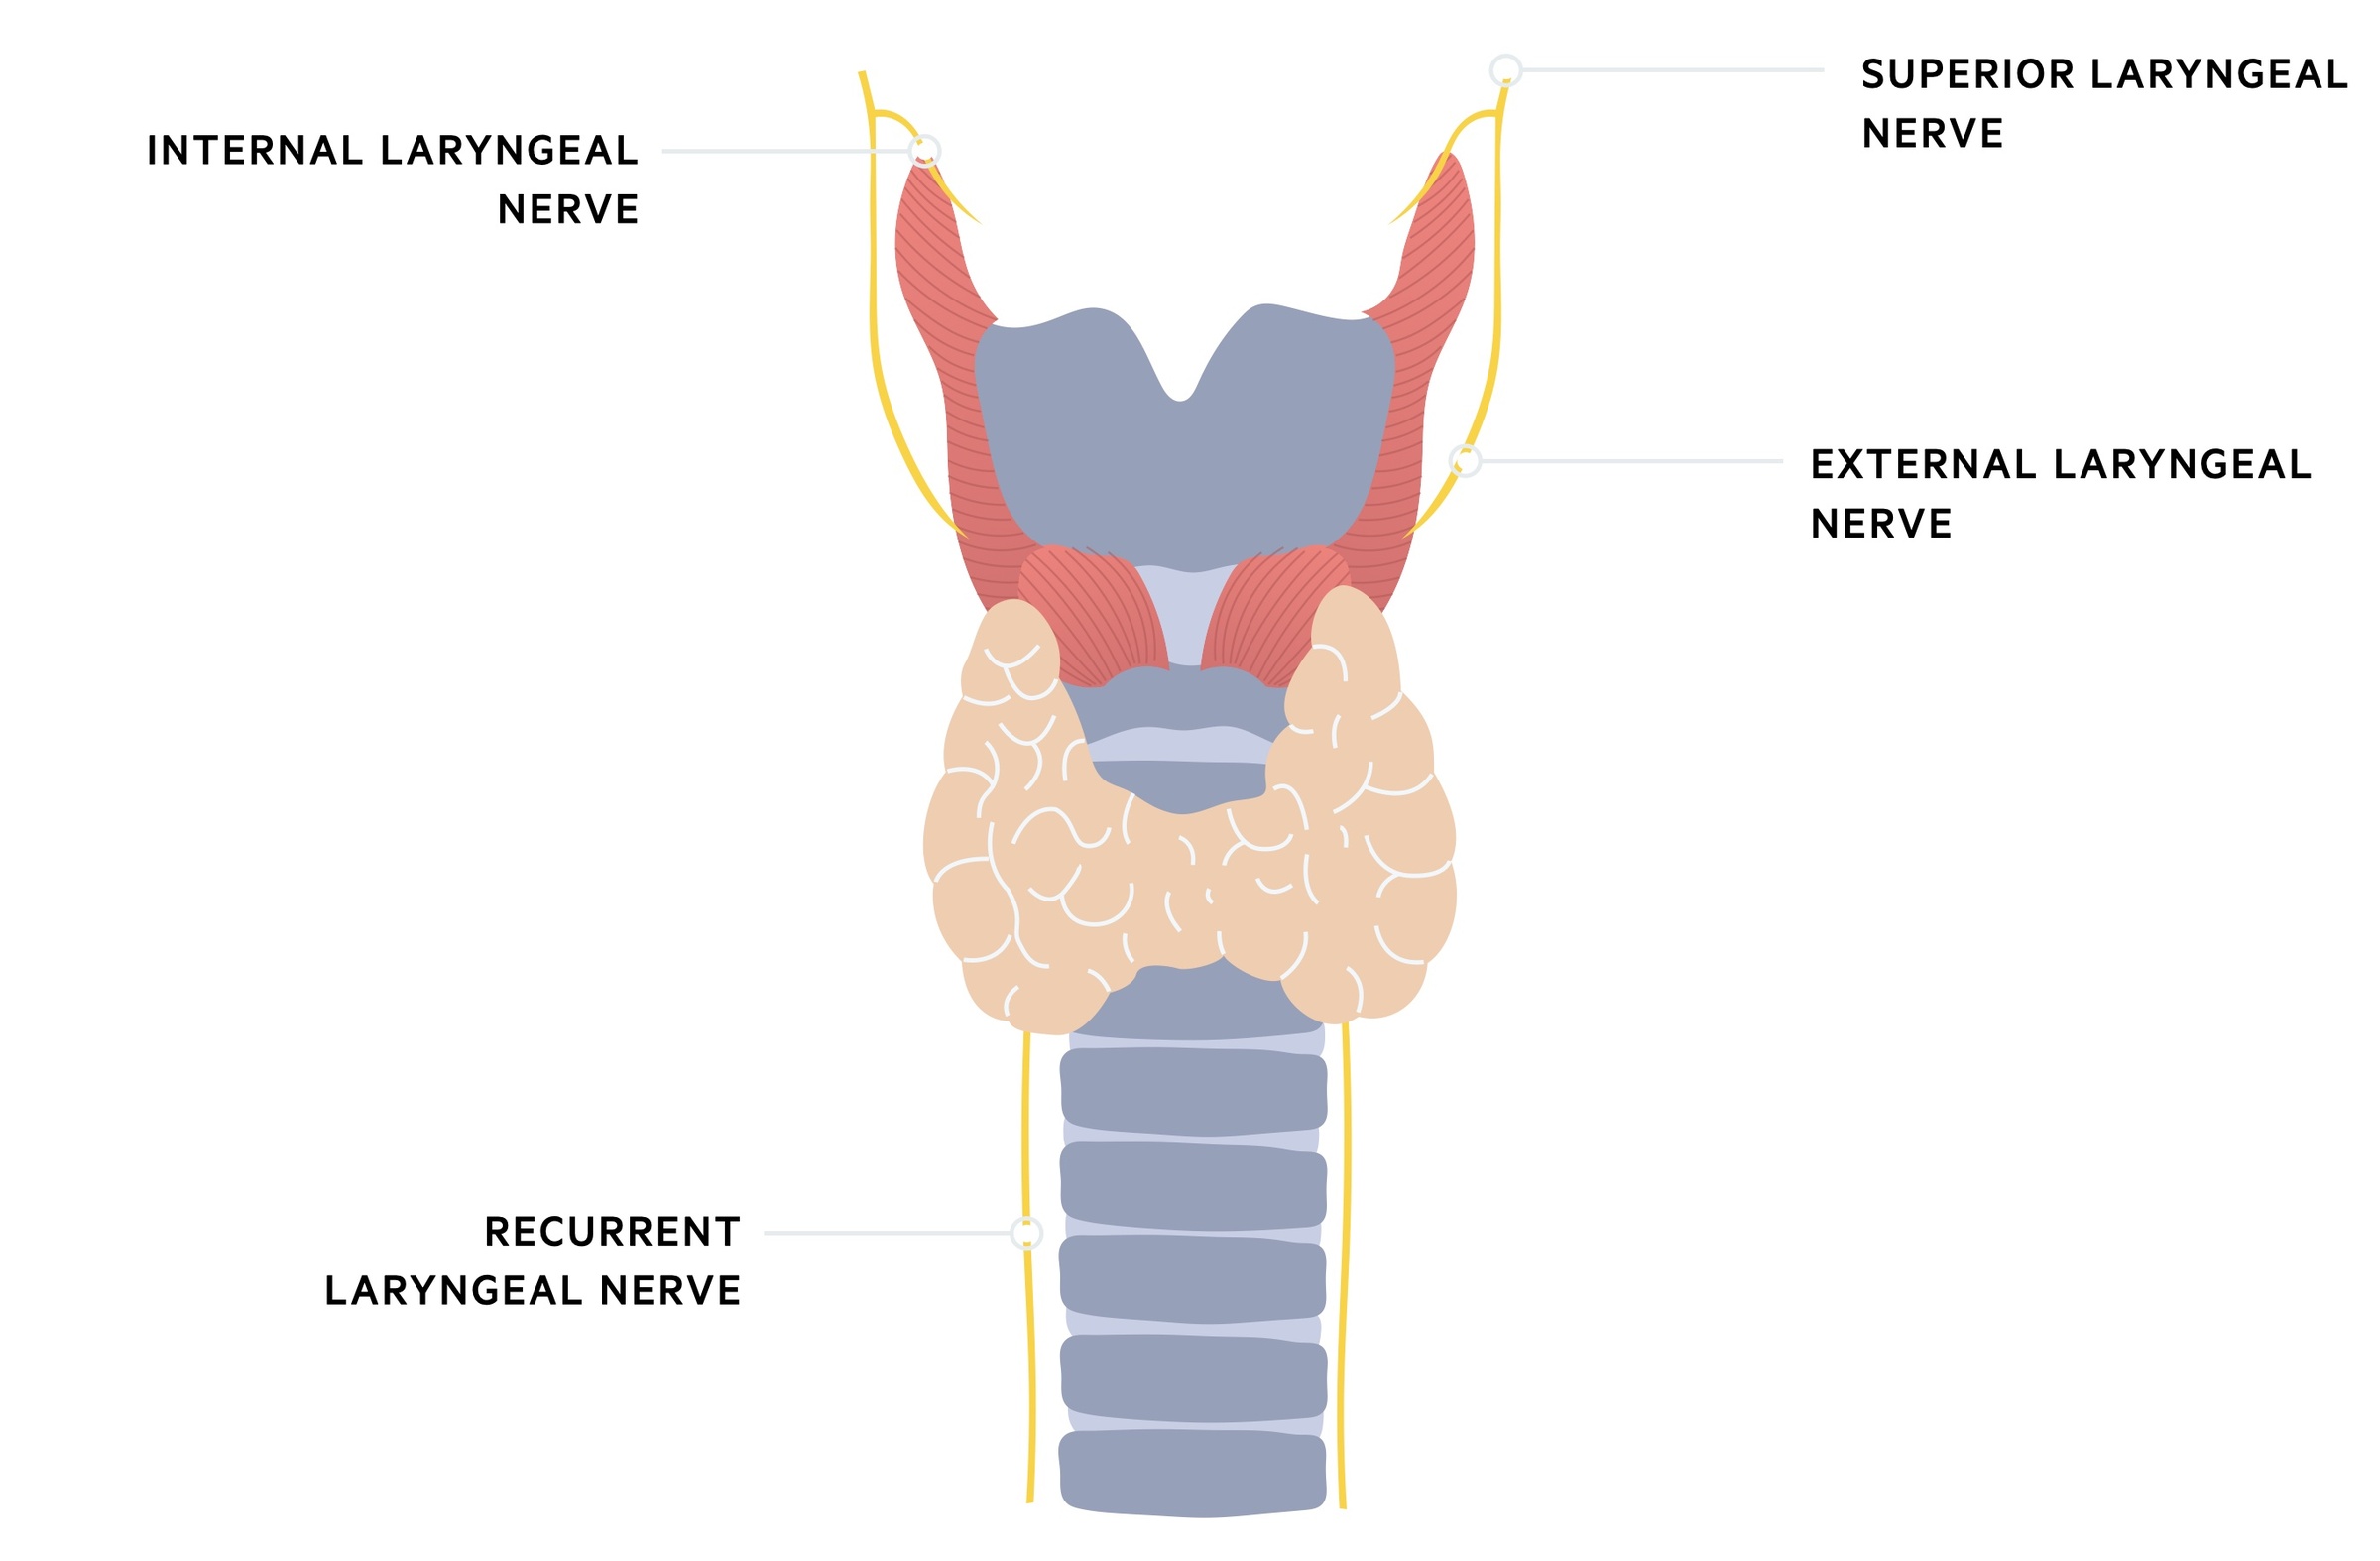 Recurrent laryngeal nerve anatomy